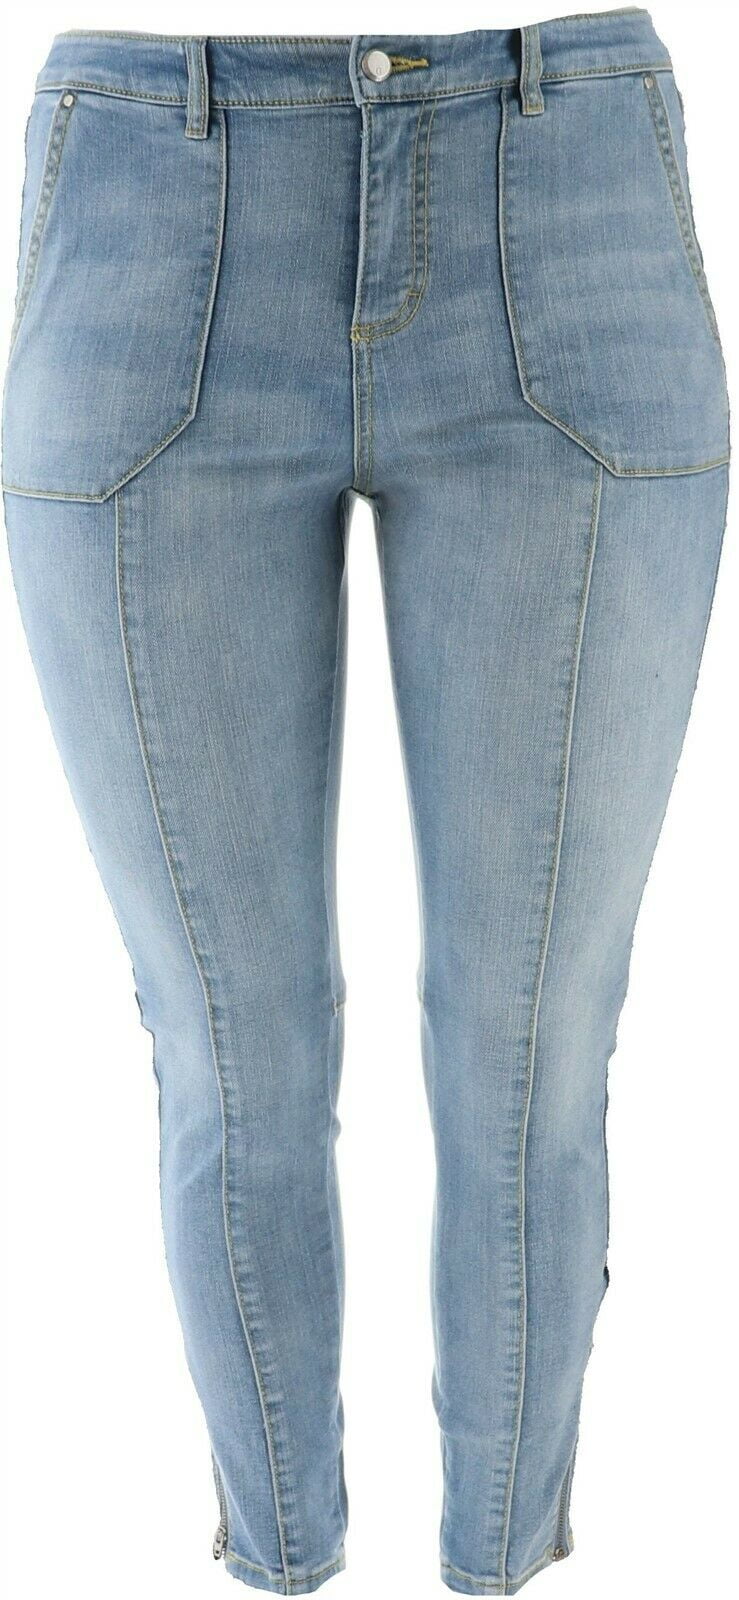 giuliana jeans